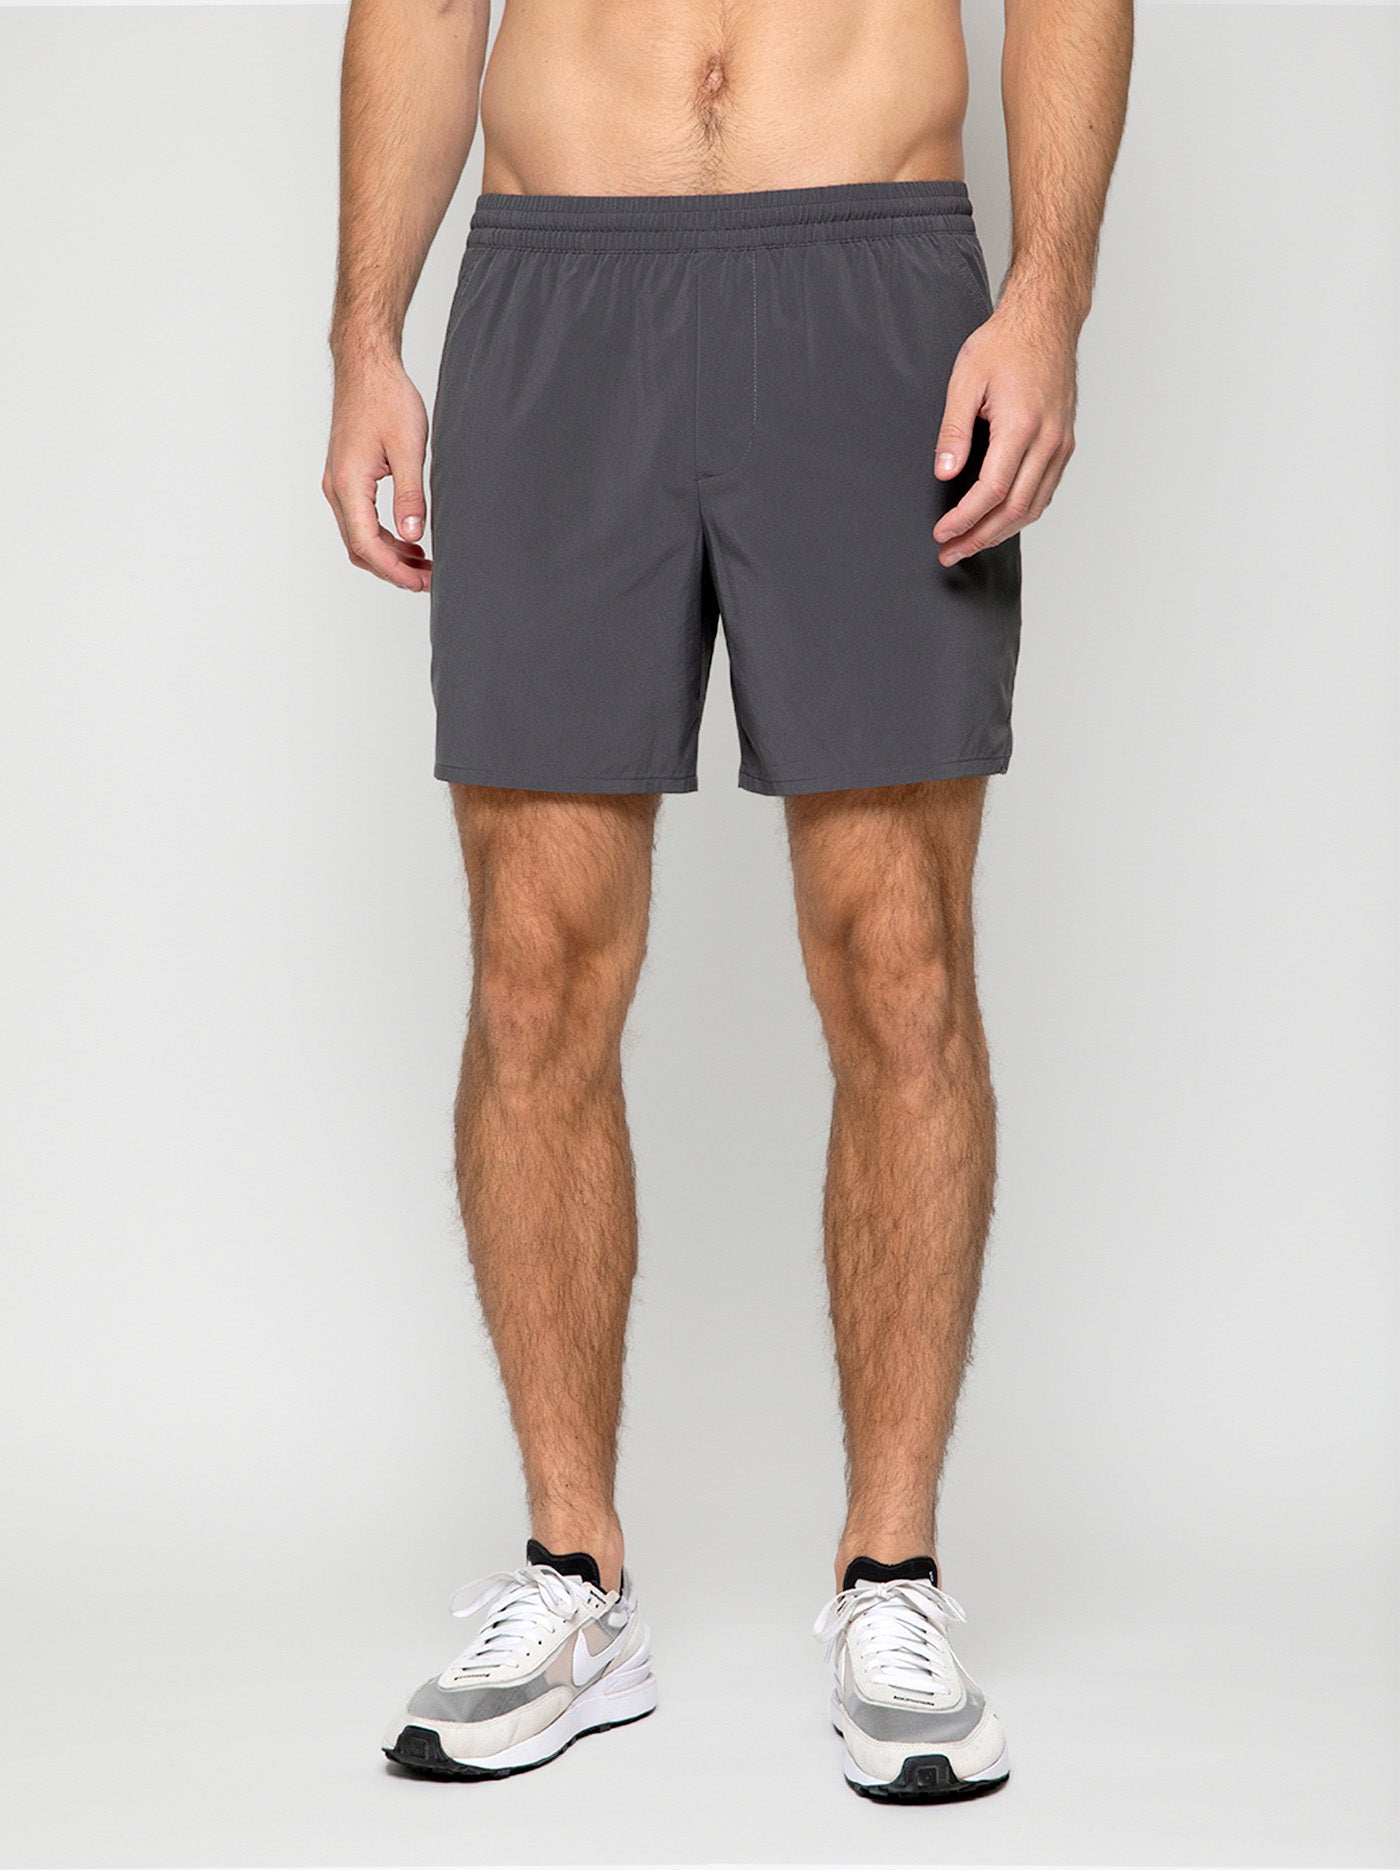 Endure Short: inch Fourlaps - Men\'s Shorts Inseam 6